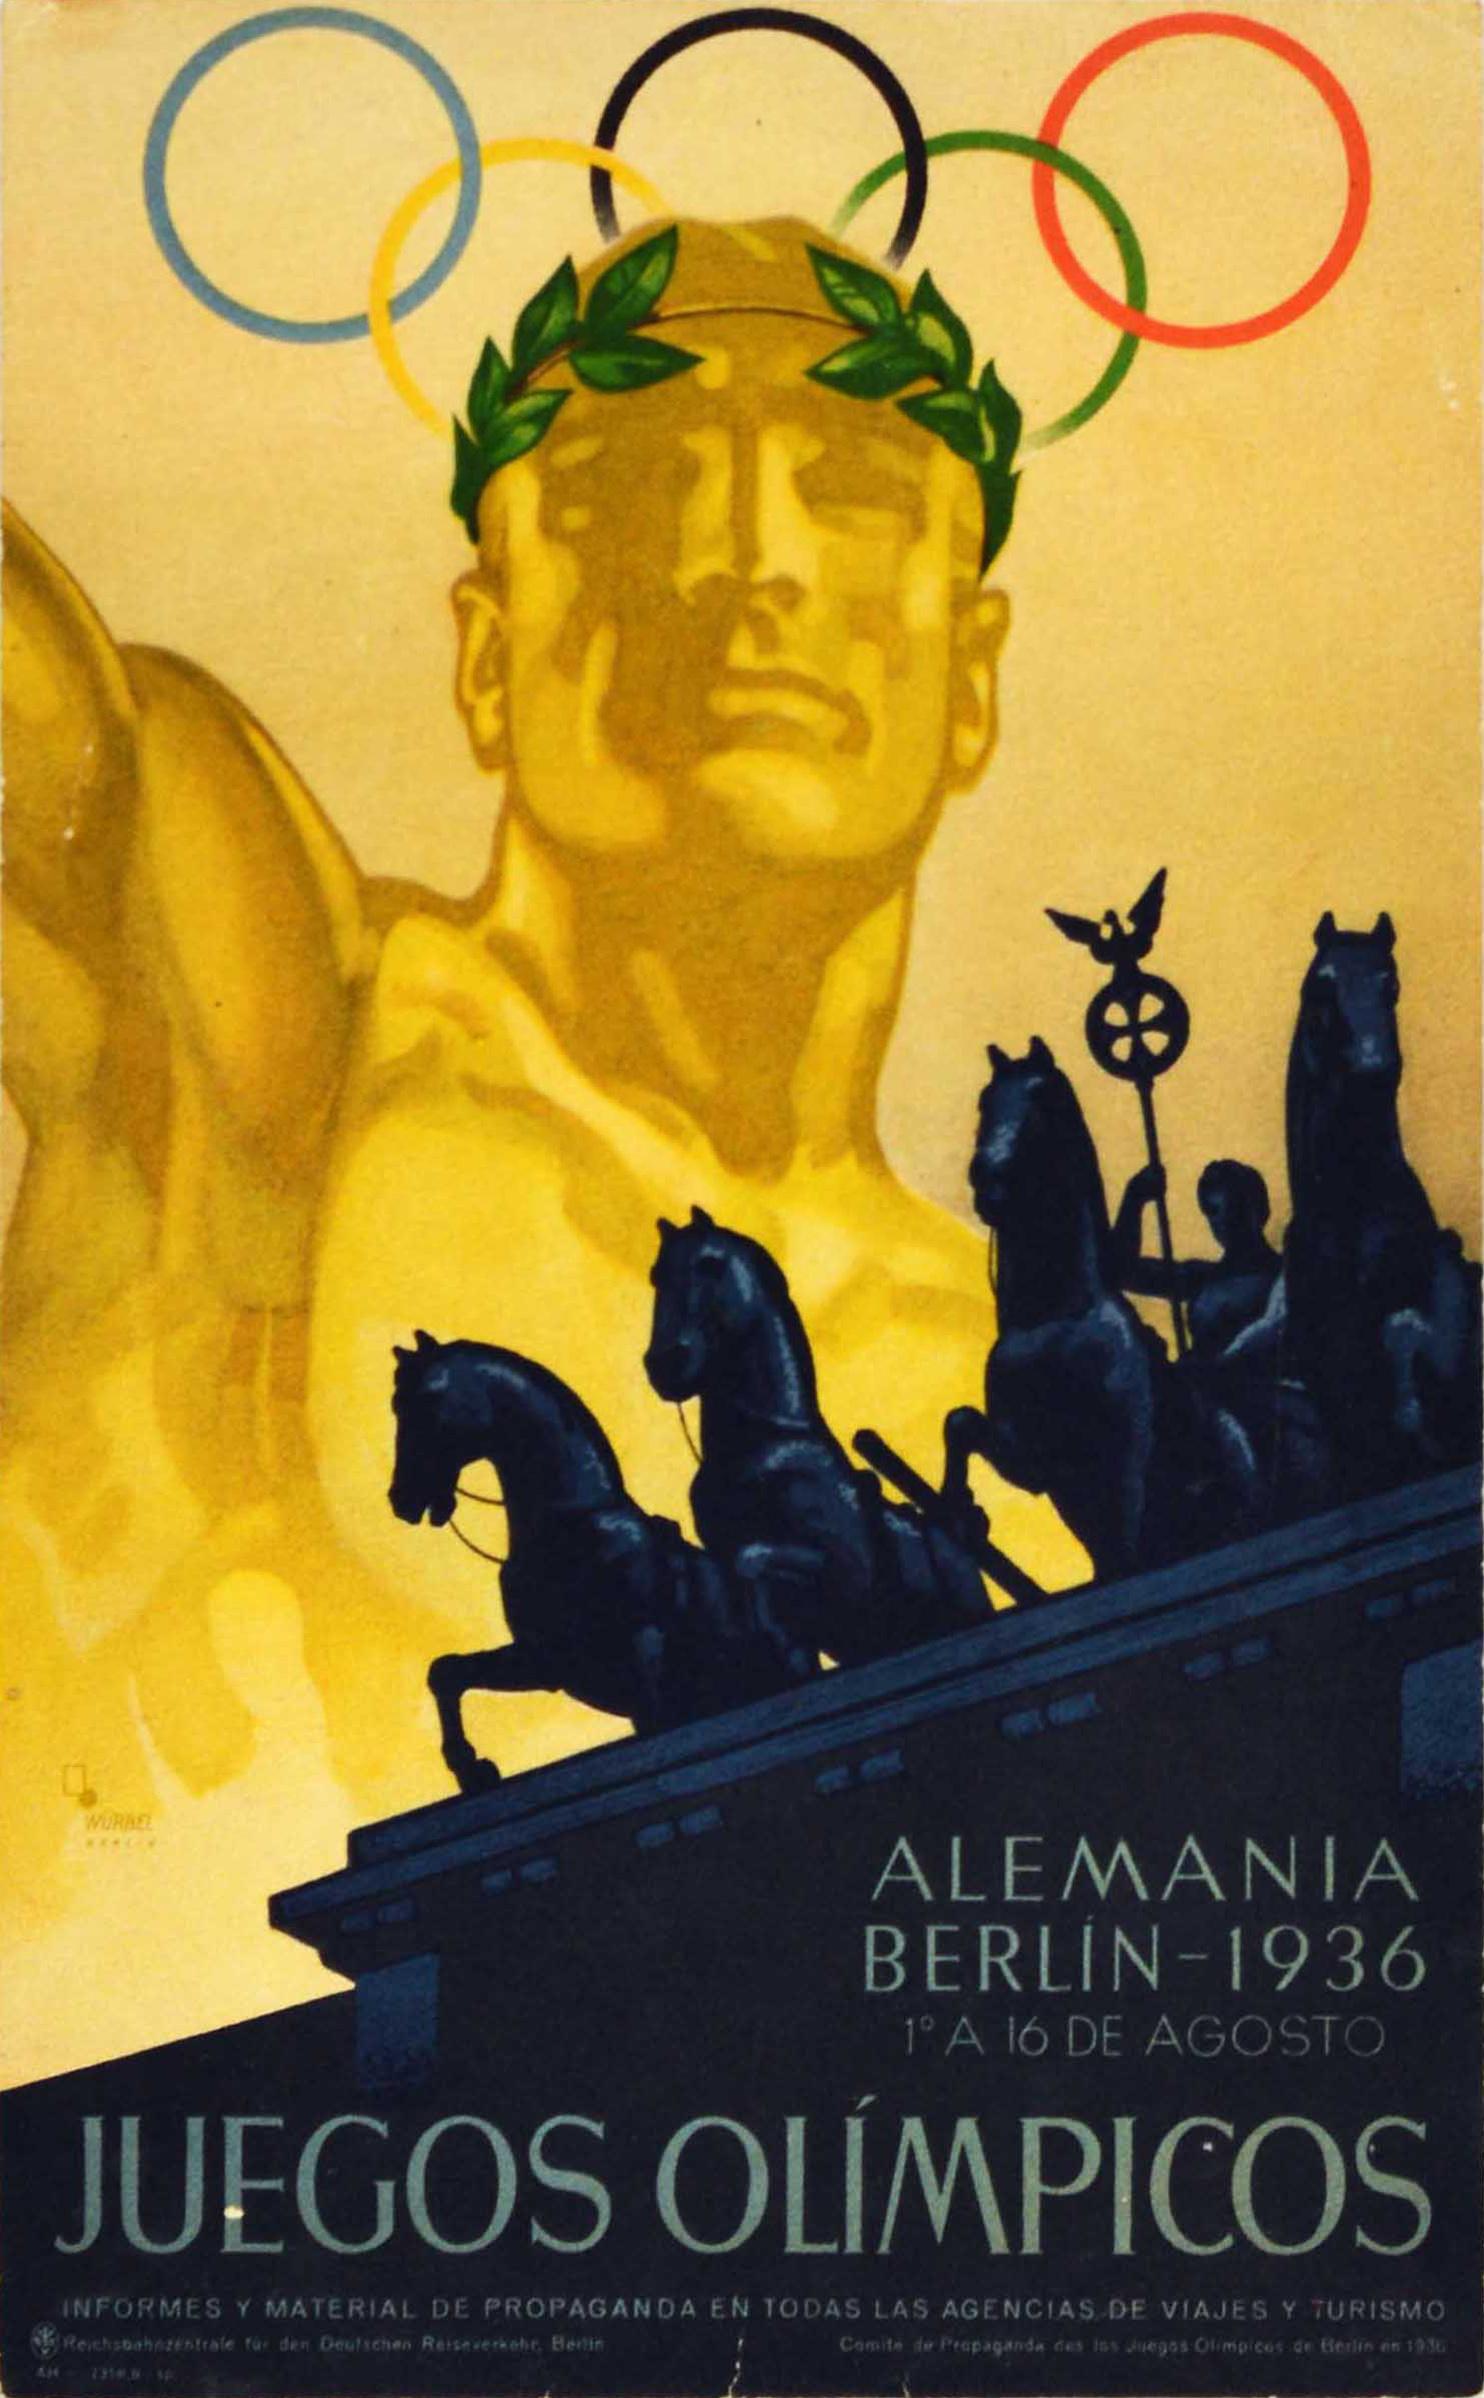 Franz Würbel Print - Original Vintage Olympic Games Poster - 1936 Berlin Olympics - Brandenburg Gate